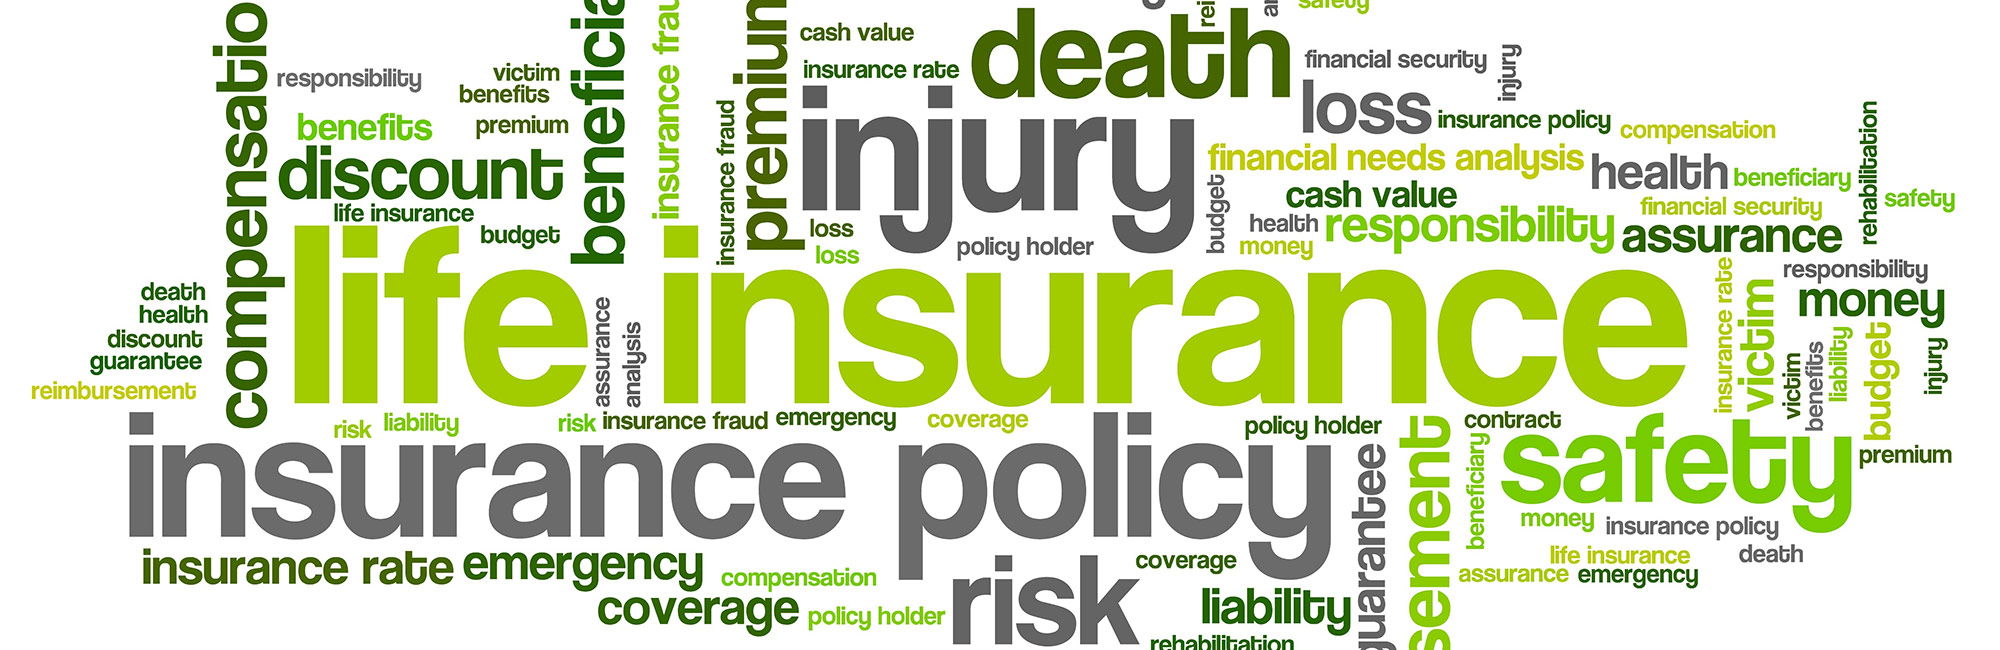 JMHI Insurance Related Image